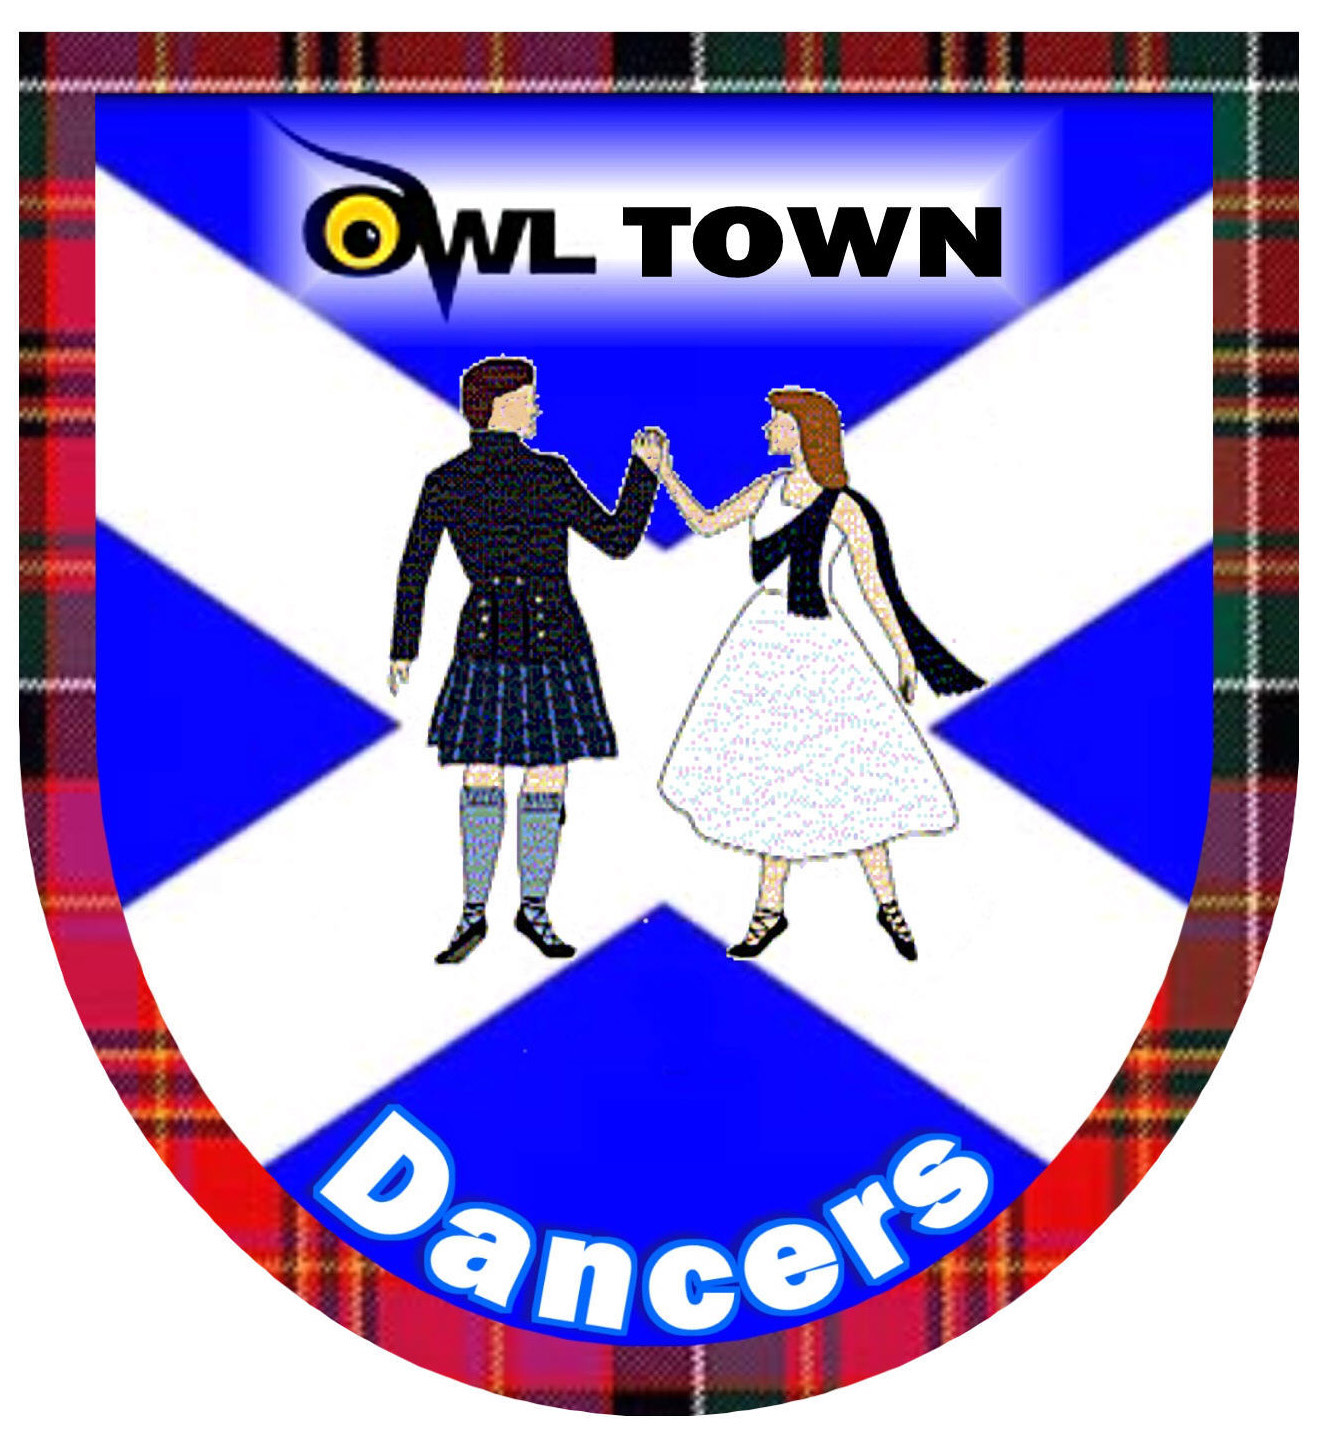 Owl Town Dancers